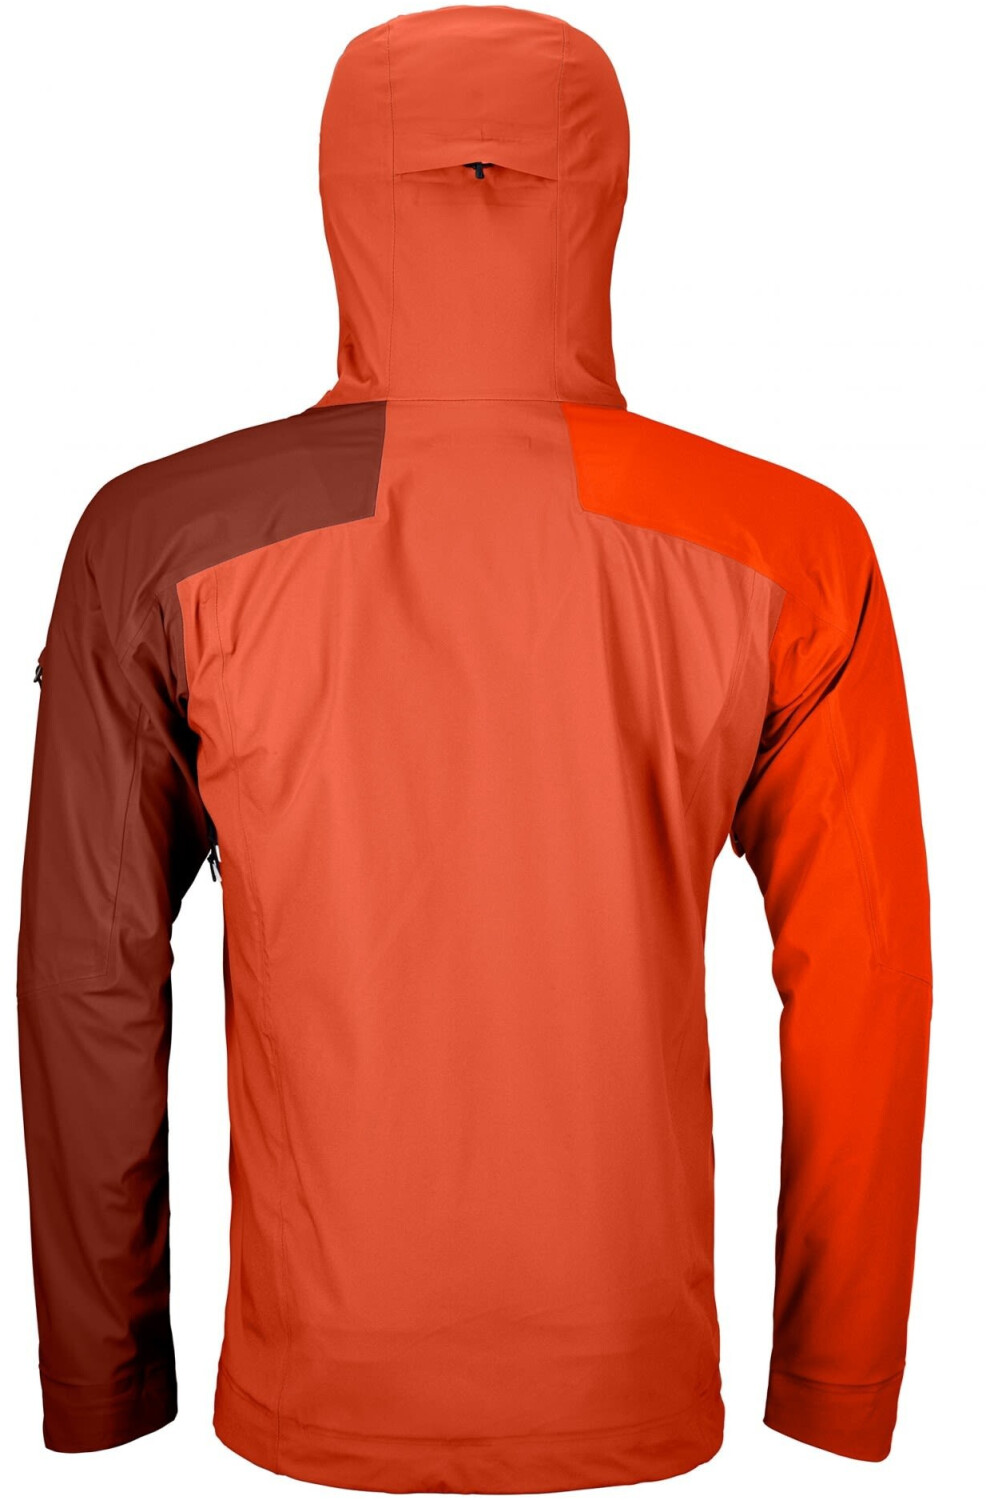 Ortovox 3L Ortler Jacket M desert orange ab 308,00